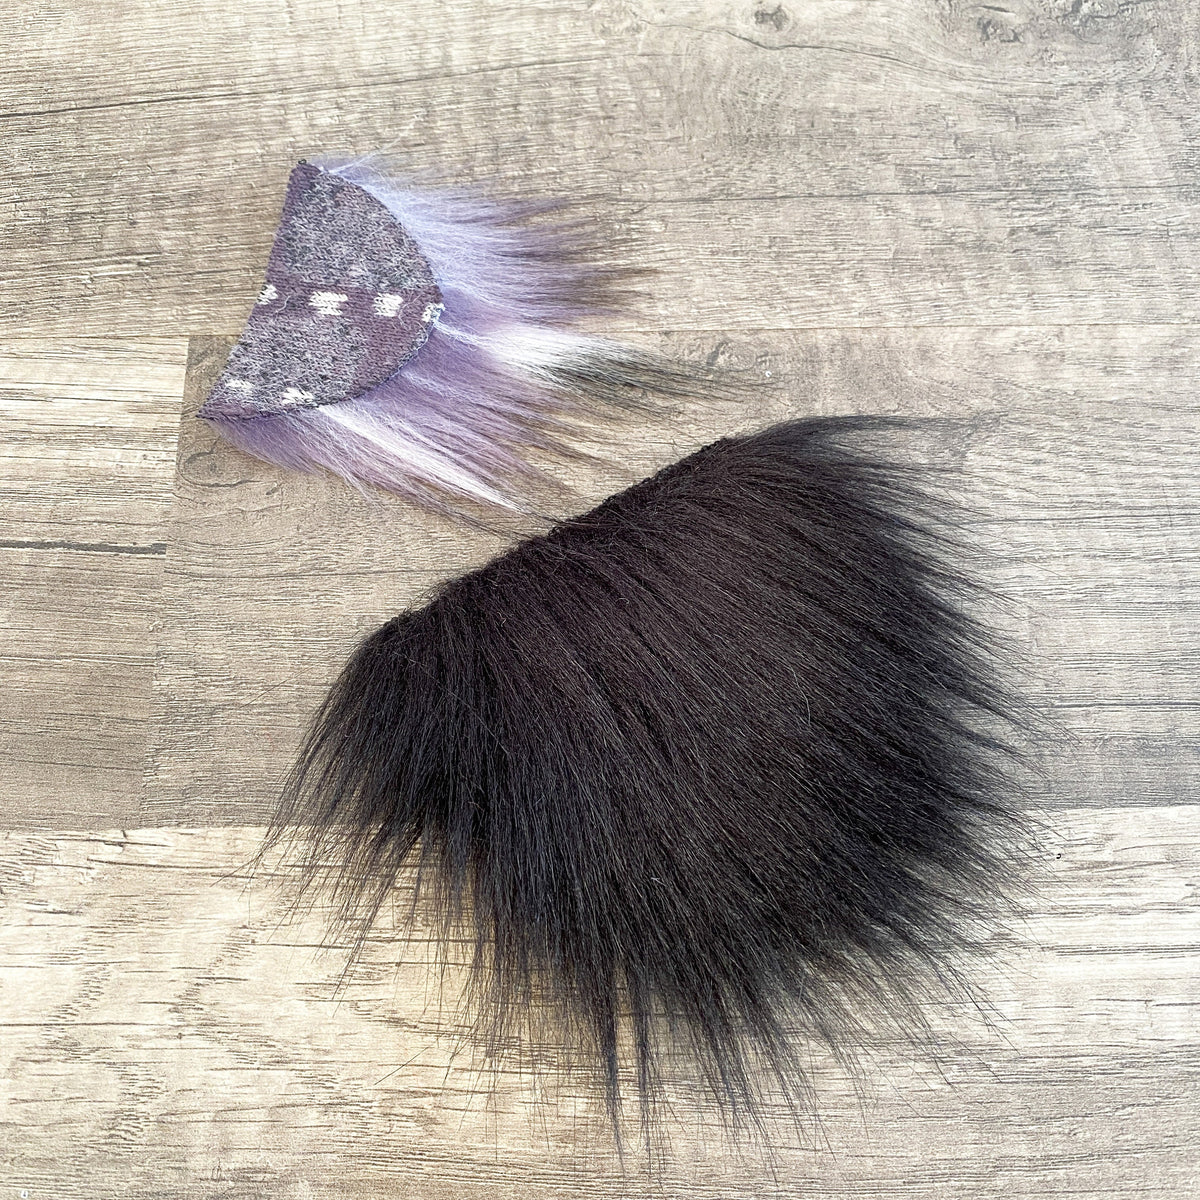 Two Piece Layered Gnome Beard - Purple Husky Over Straight Black